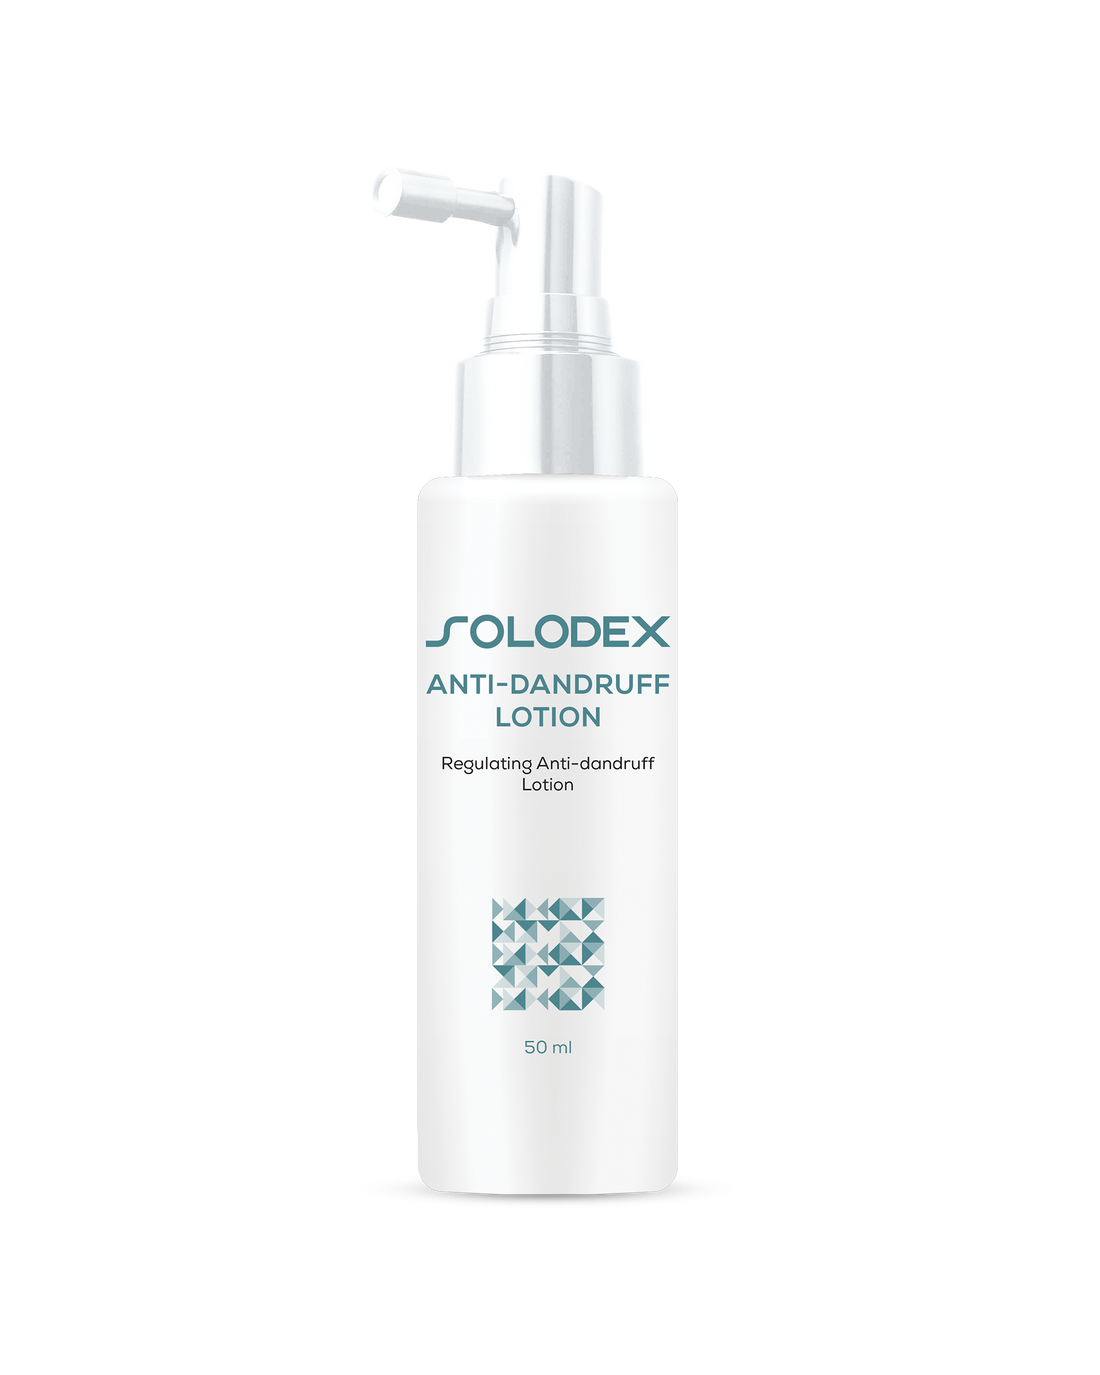 Solodex anti-dandruff lotion